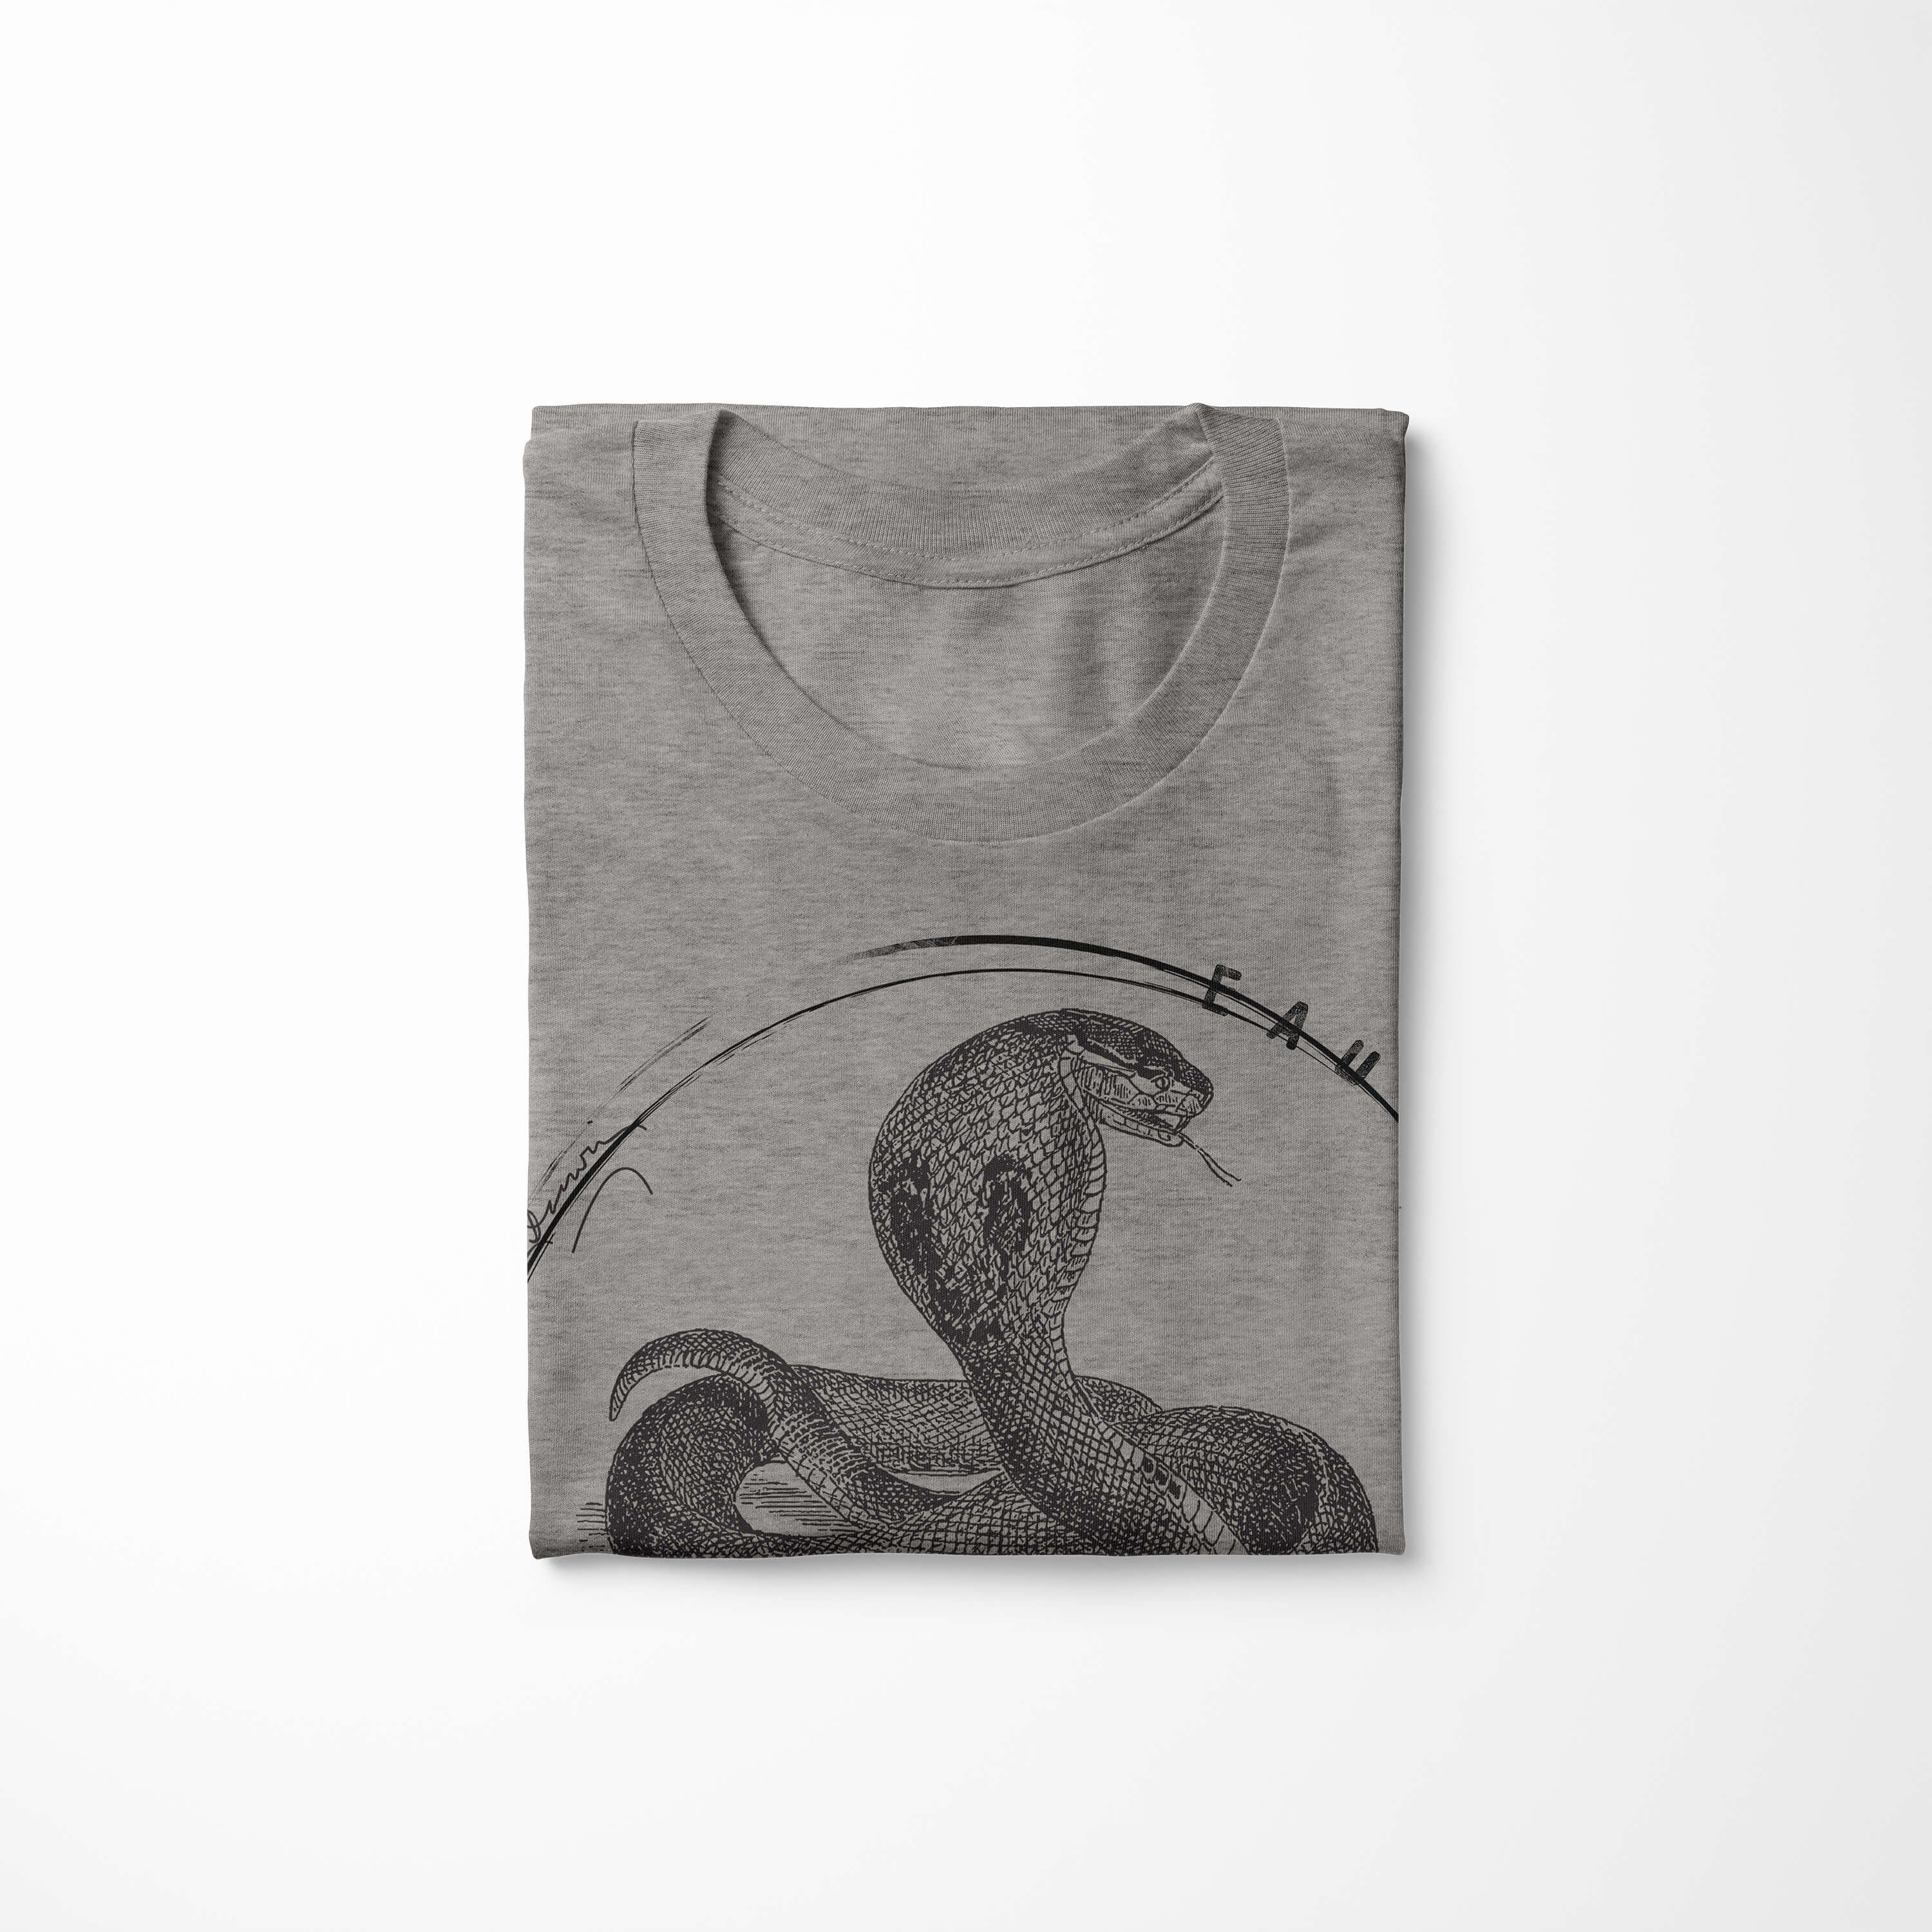 Evolution Ash Art Kobra Herren T-Shirt Sinus T-Shirt